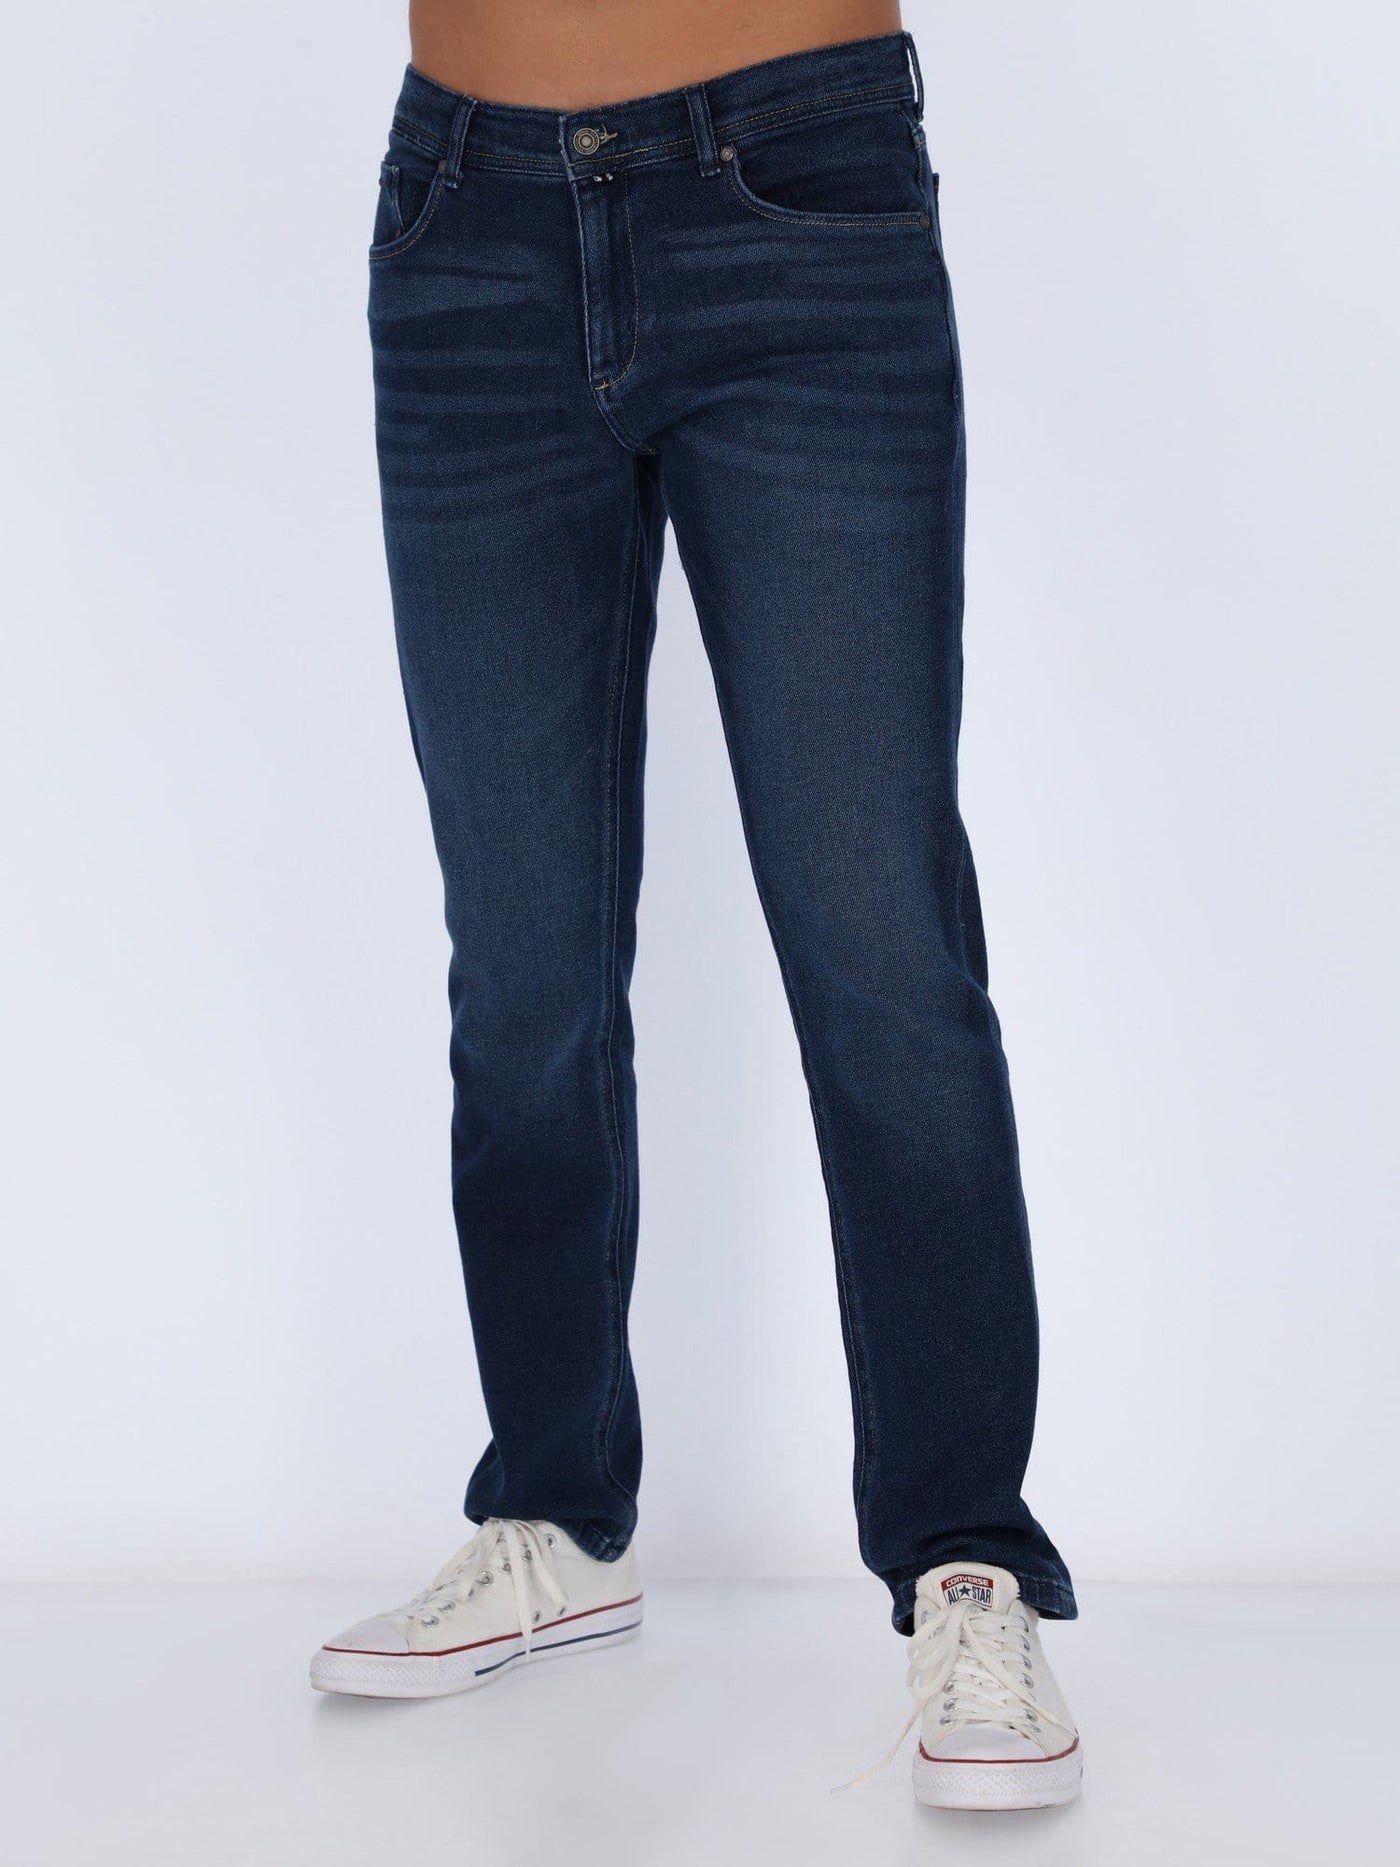 Daniel Hechter Pants & Shorts LIGHT BLUE / 30 Jeans Pants with Wash Out Effect